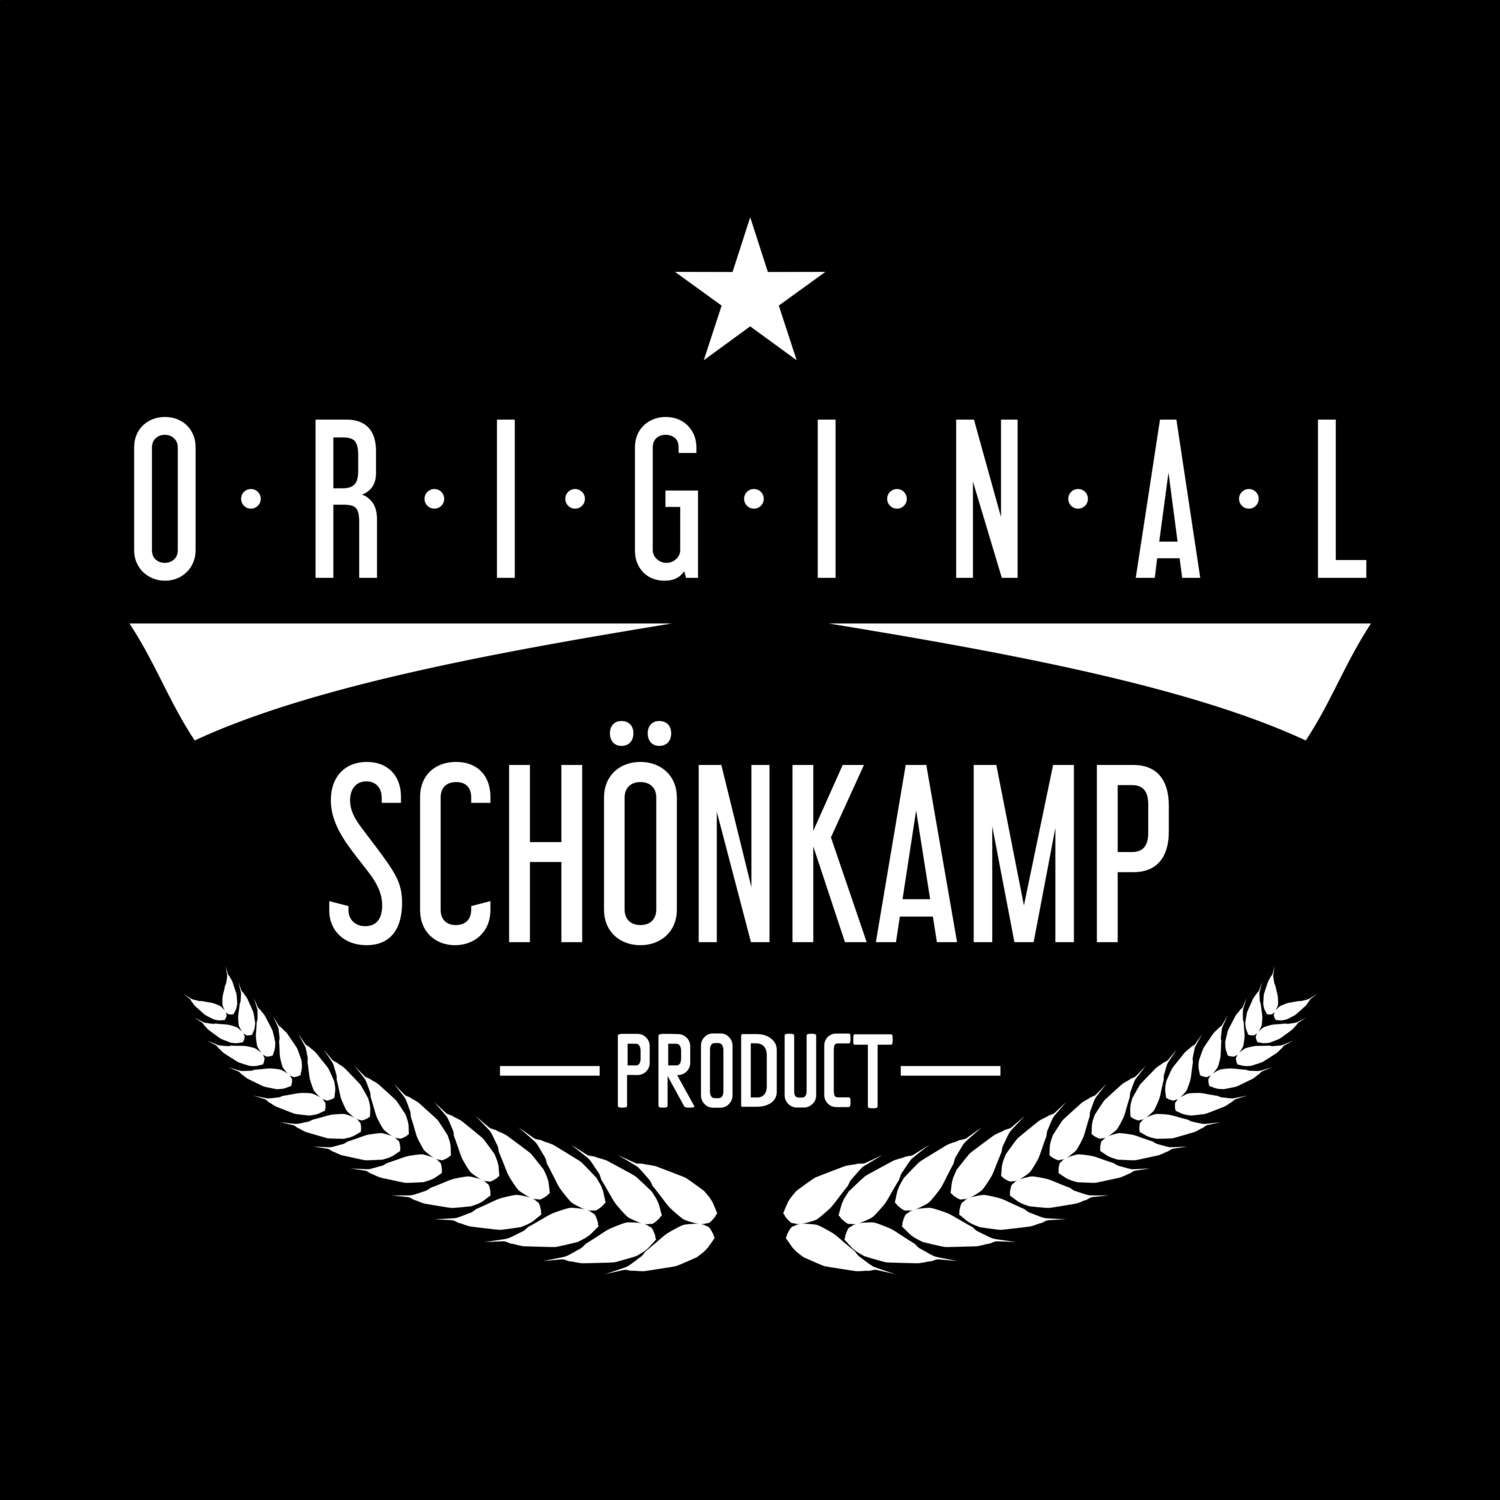 Schönkamp T-Shirt »Original Product«